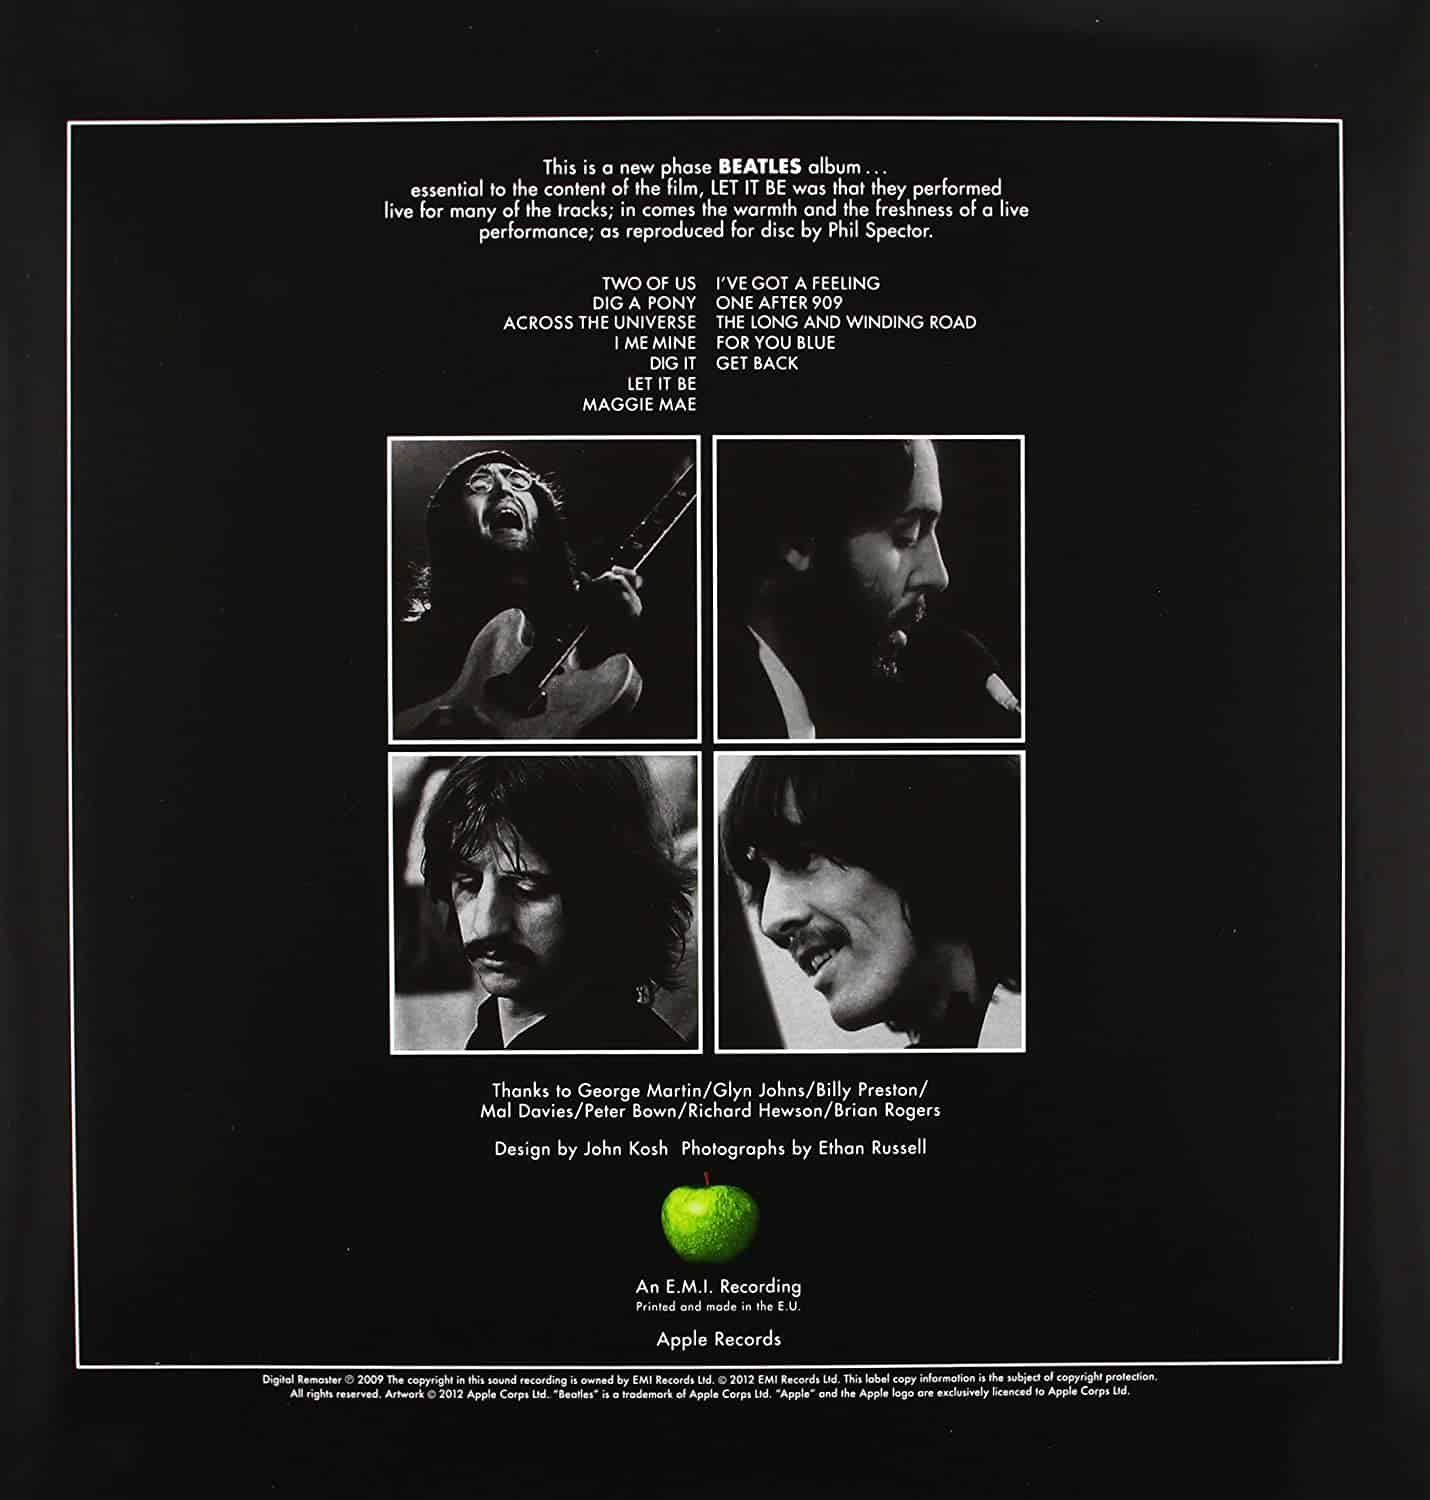 Beatles-Let-It-Be-vinyl-record-album-back-cover